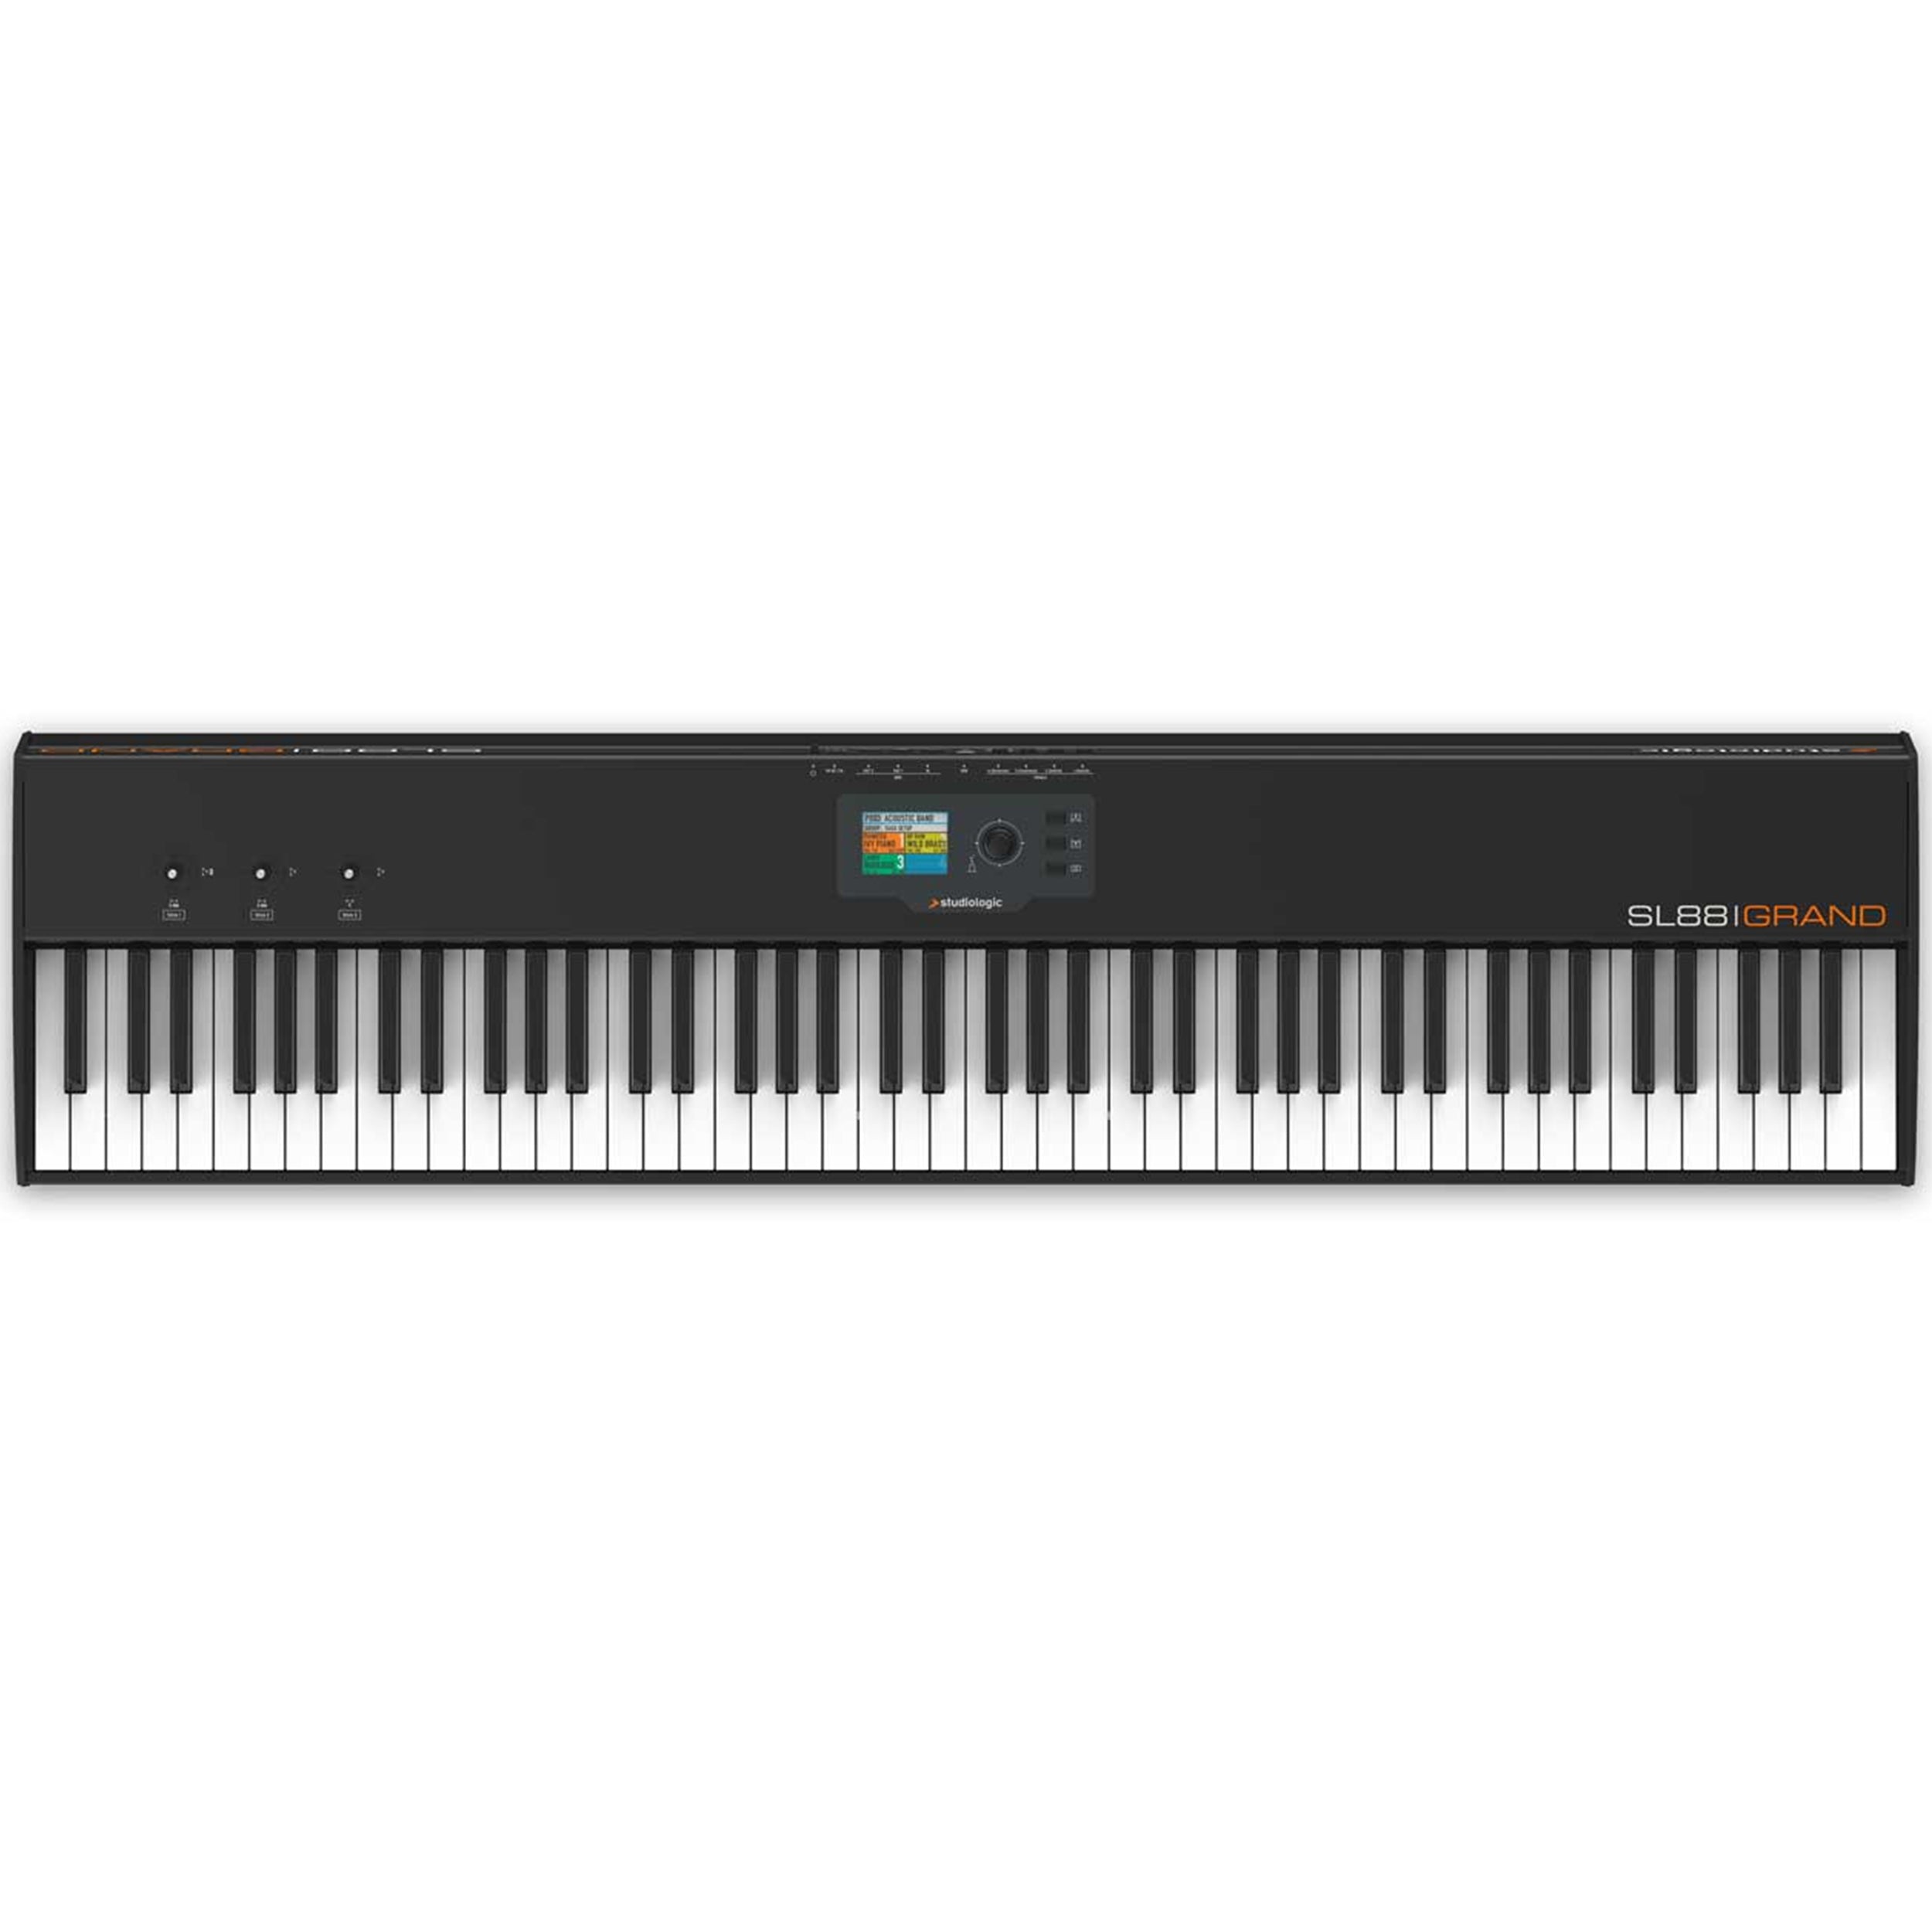 Studiologic SL88 Grand Keyboard Controller - Top View